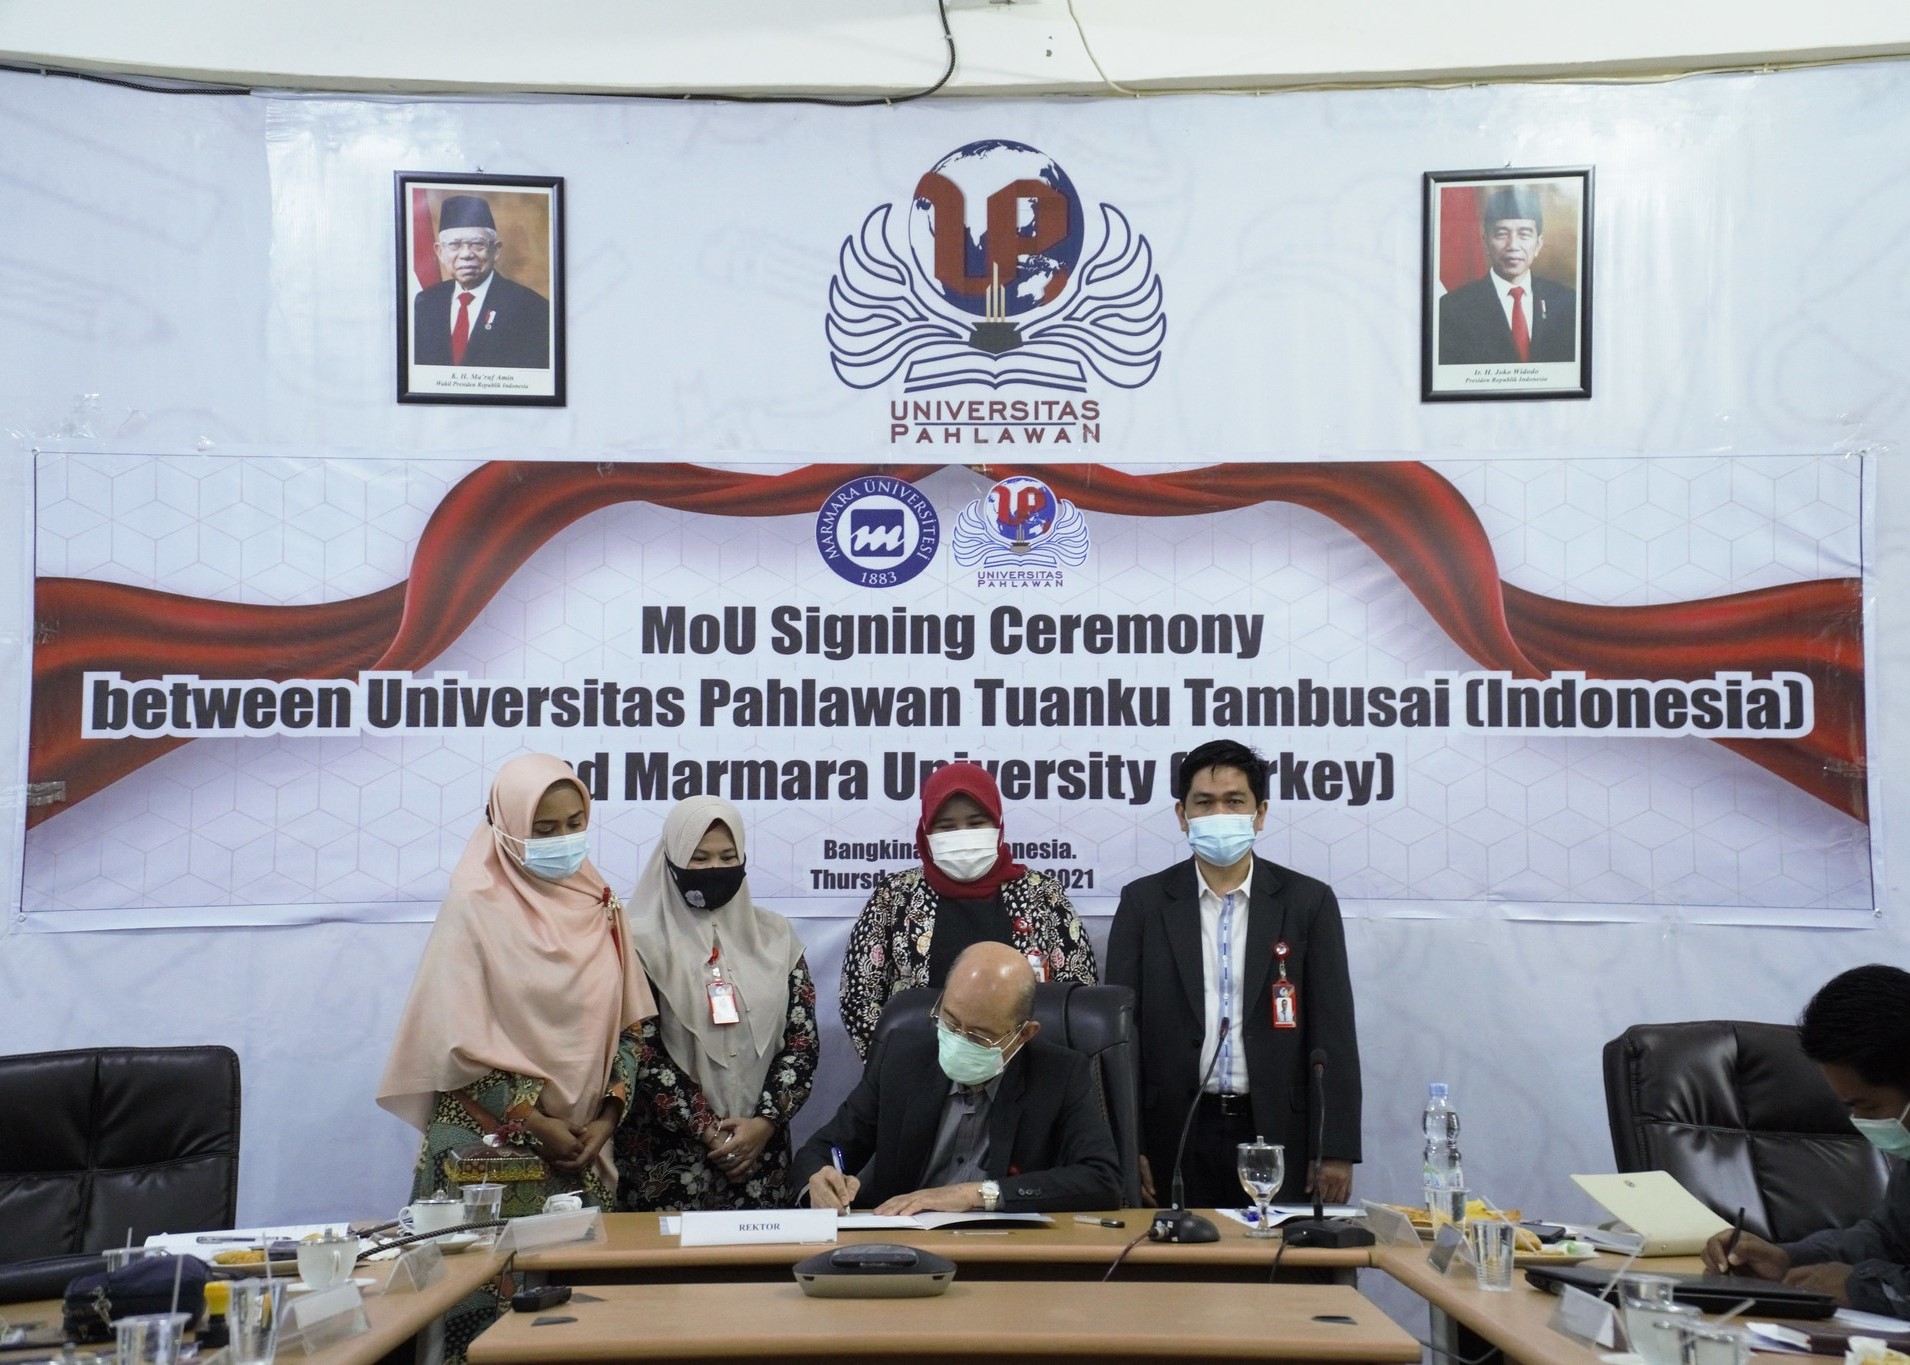 MoU Signing Between Universitas Pahlawan (Indonesia) and Marmara University (Turkey)